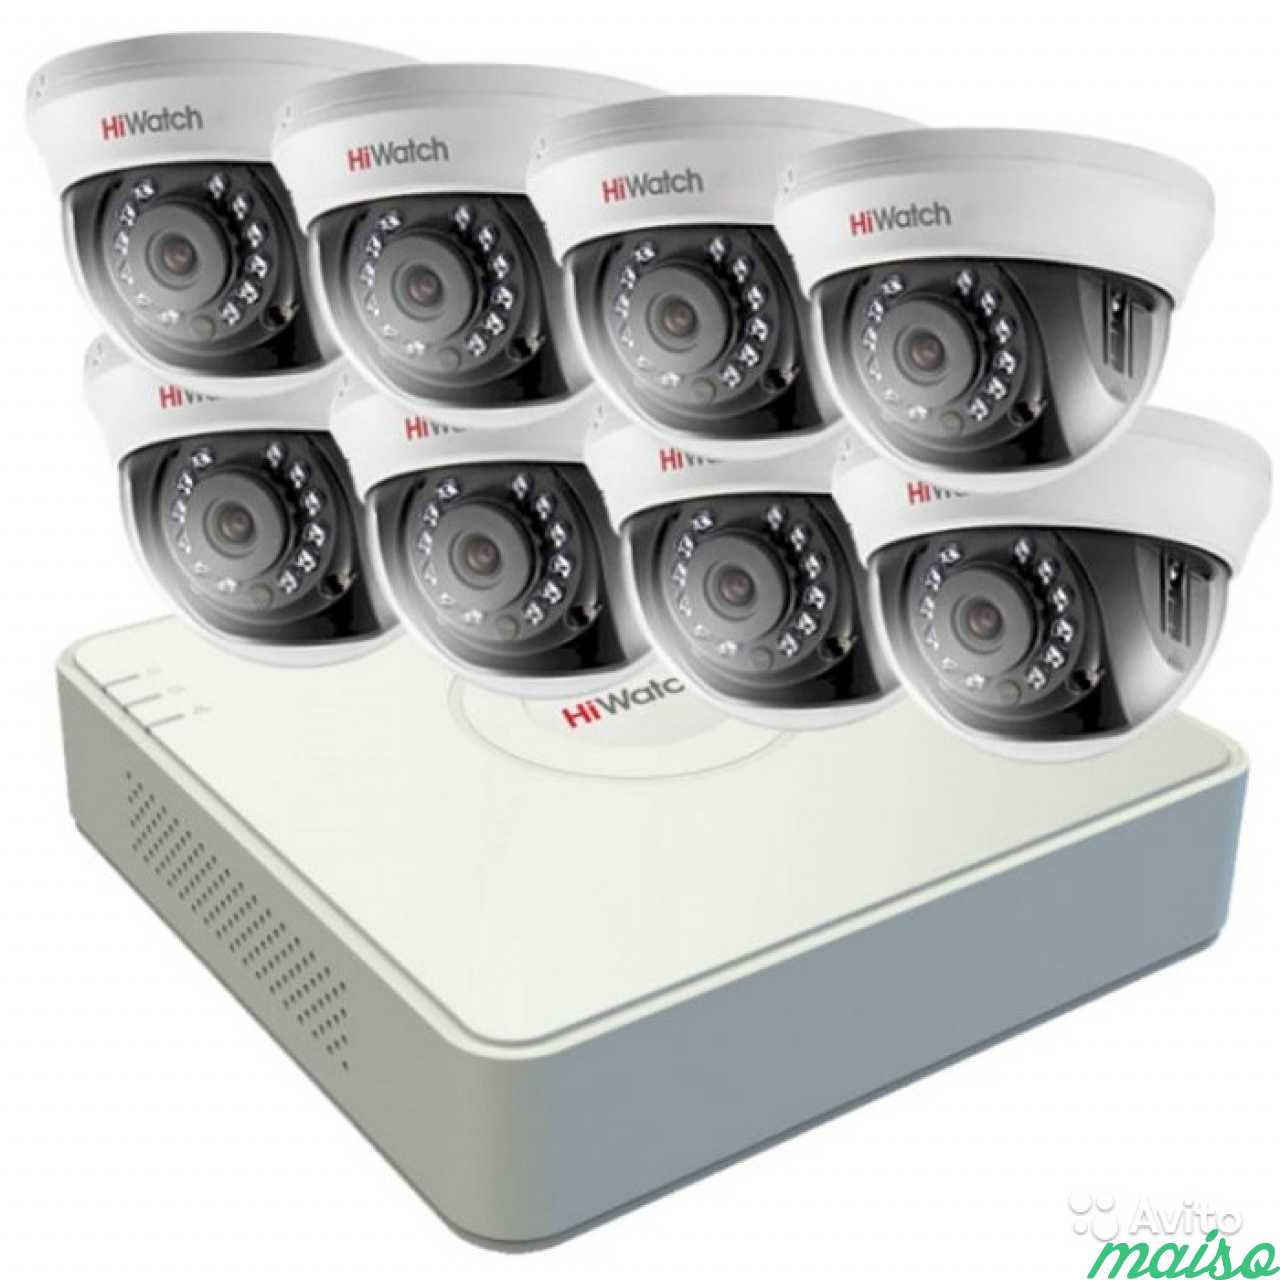 Hiwatch регистратор 16. Комплект HIWATCH t209p. Комплект видеонаблюдения HIWATCH IP 4. Комплект видеонаблюдения Hikvision на 4 камеры IP. Комплект 8 камер HIWATCH.